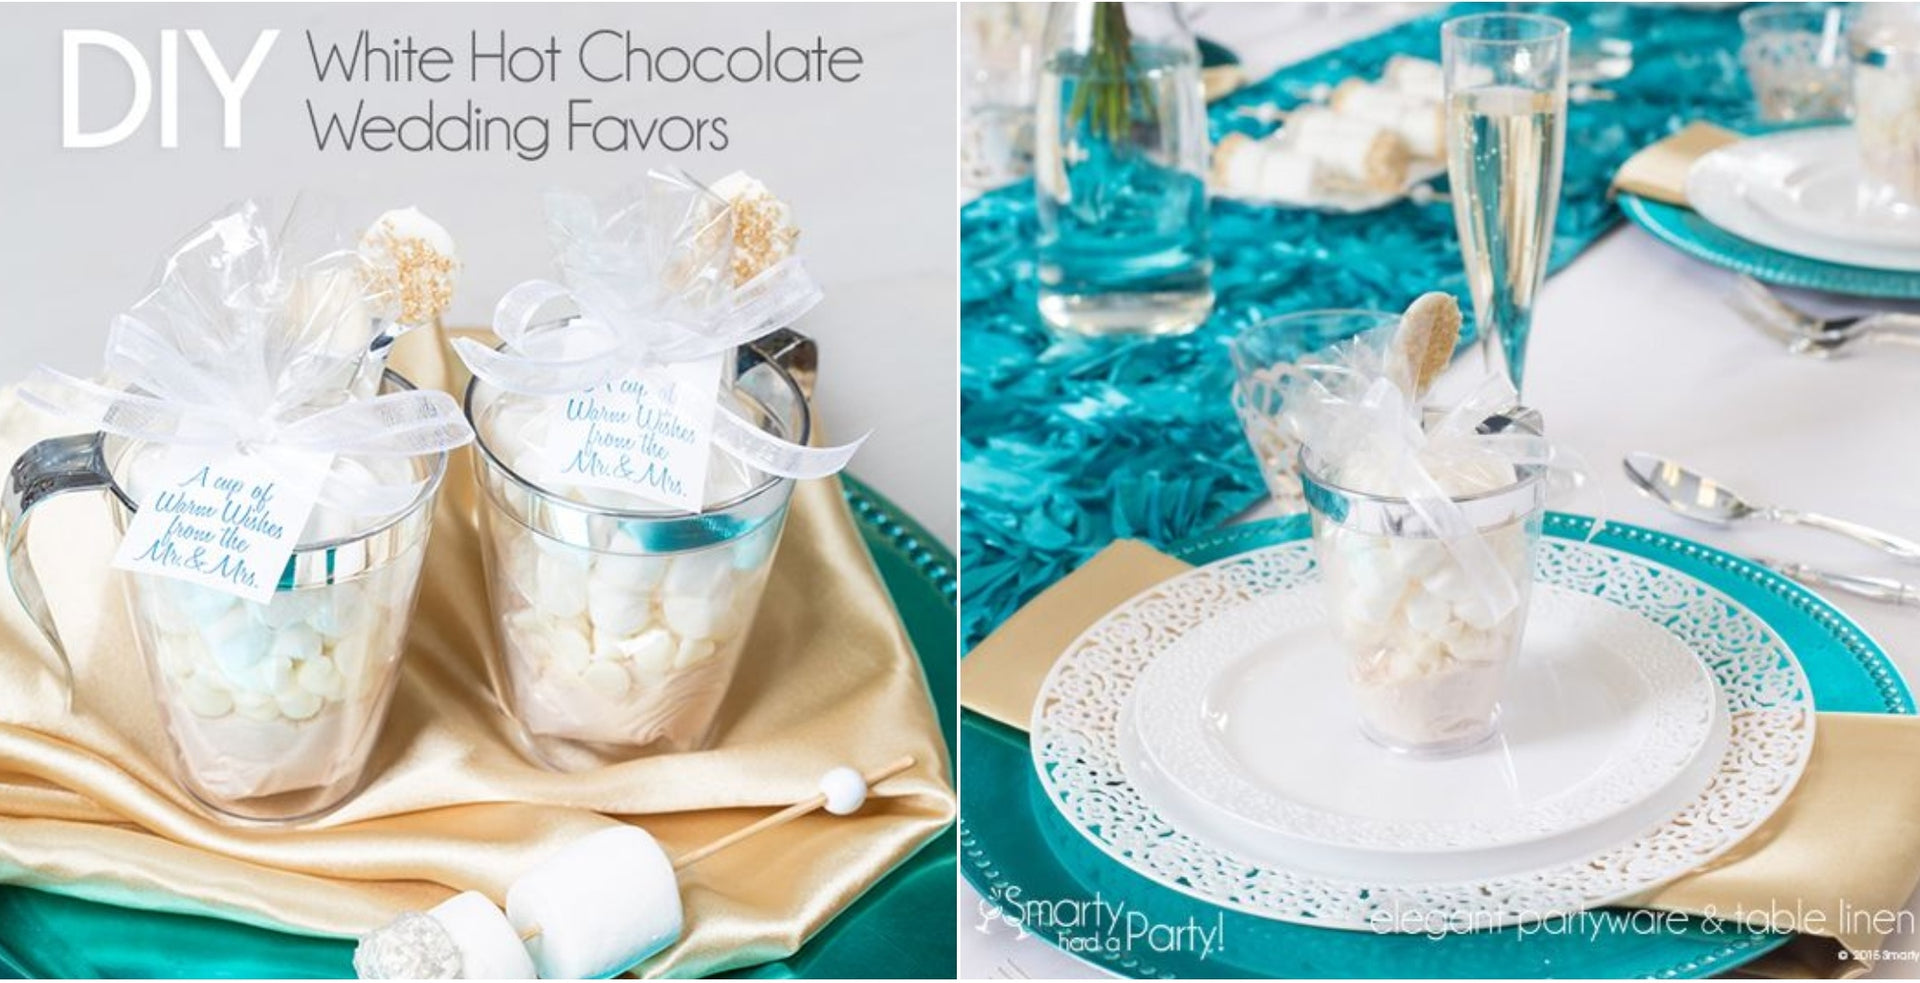 DIY White Hot Chocolate Wedding Favors